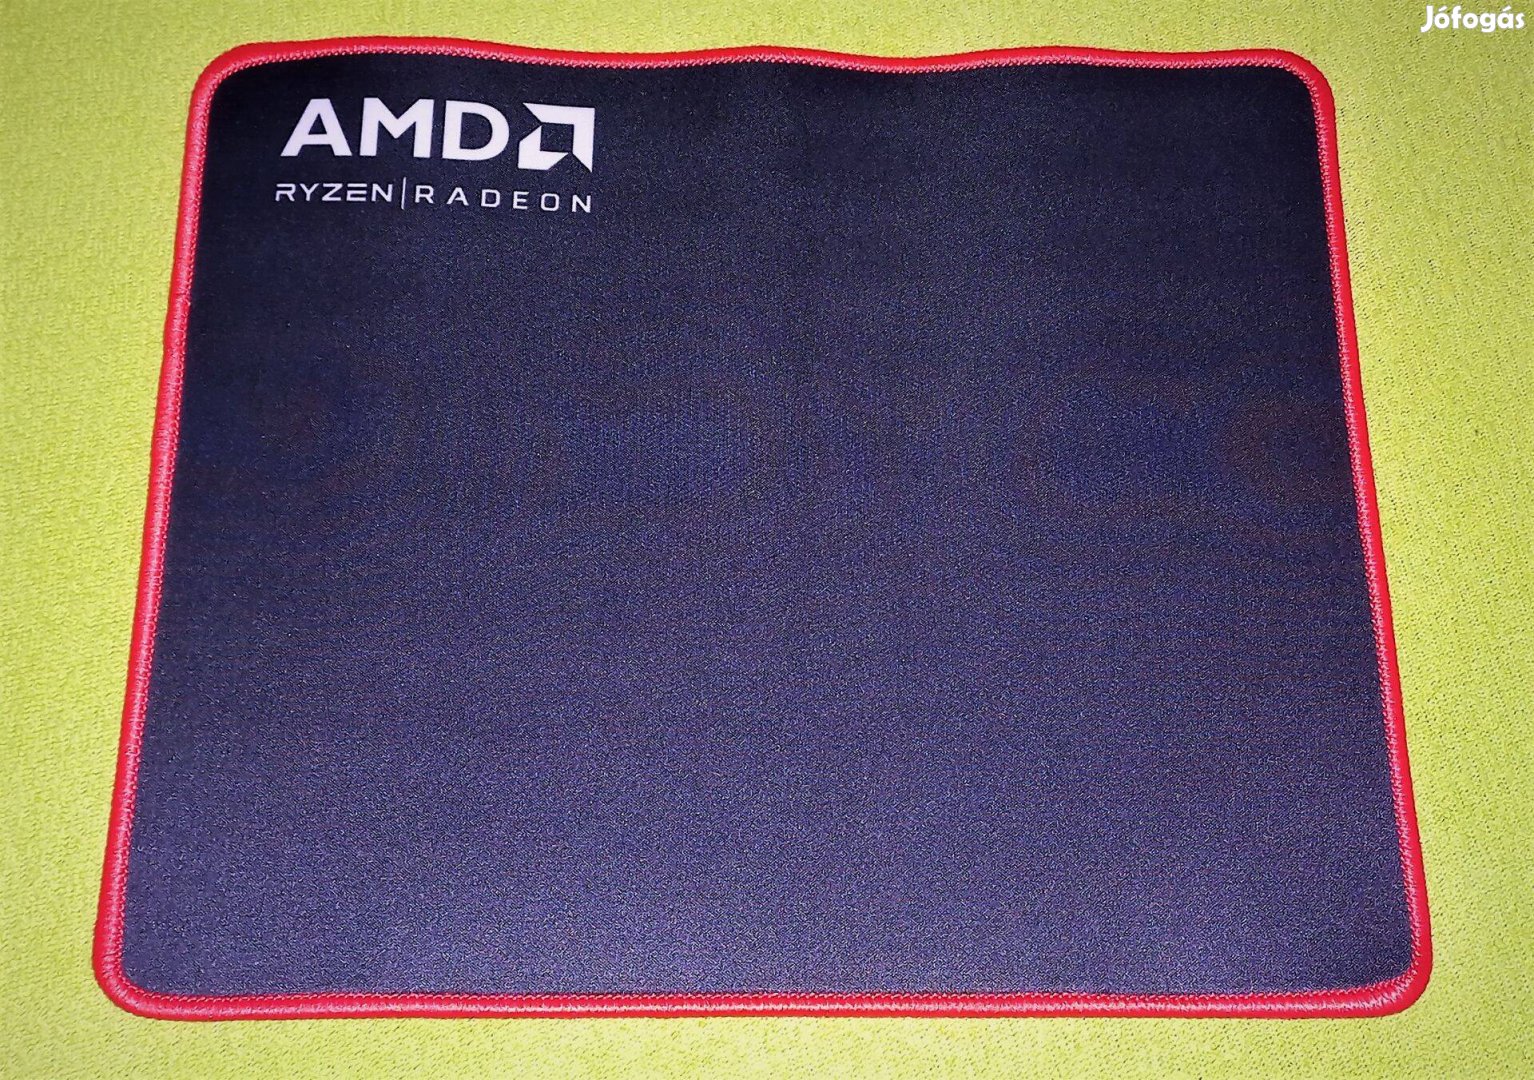 AMD Ryzen/Radeon Gamer egérpad - Új